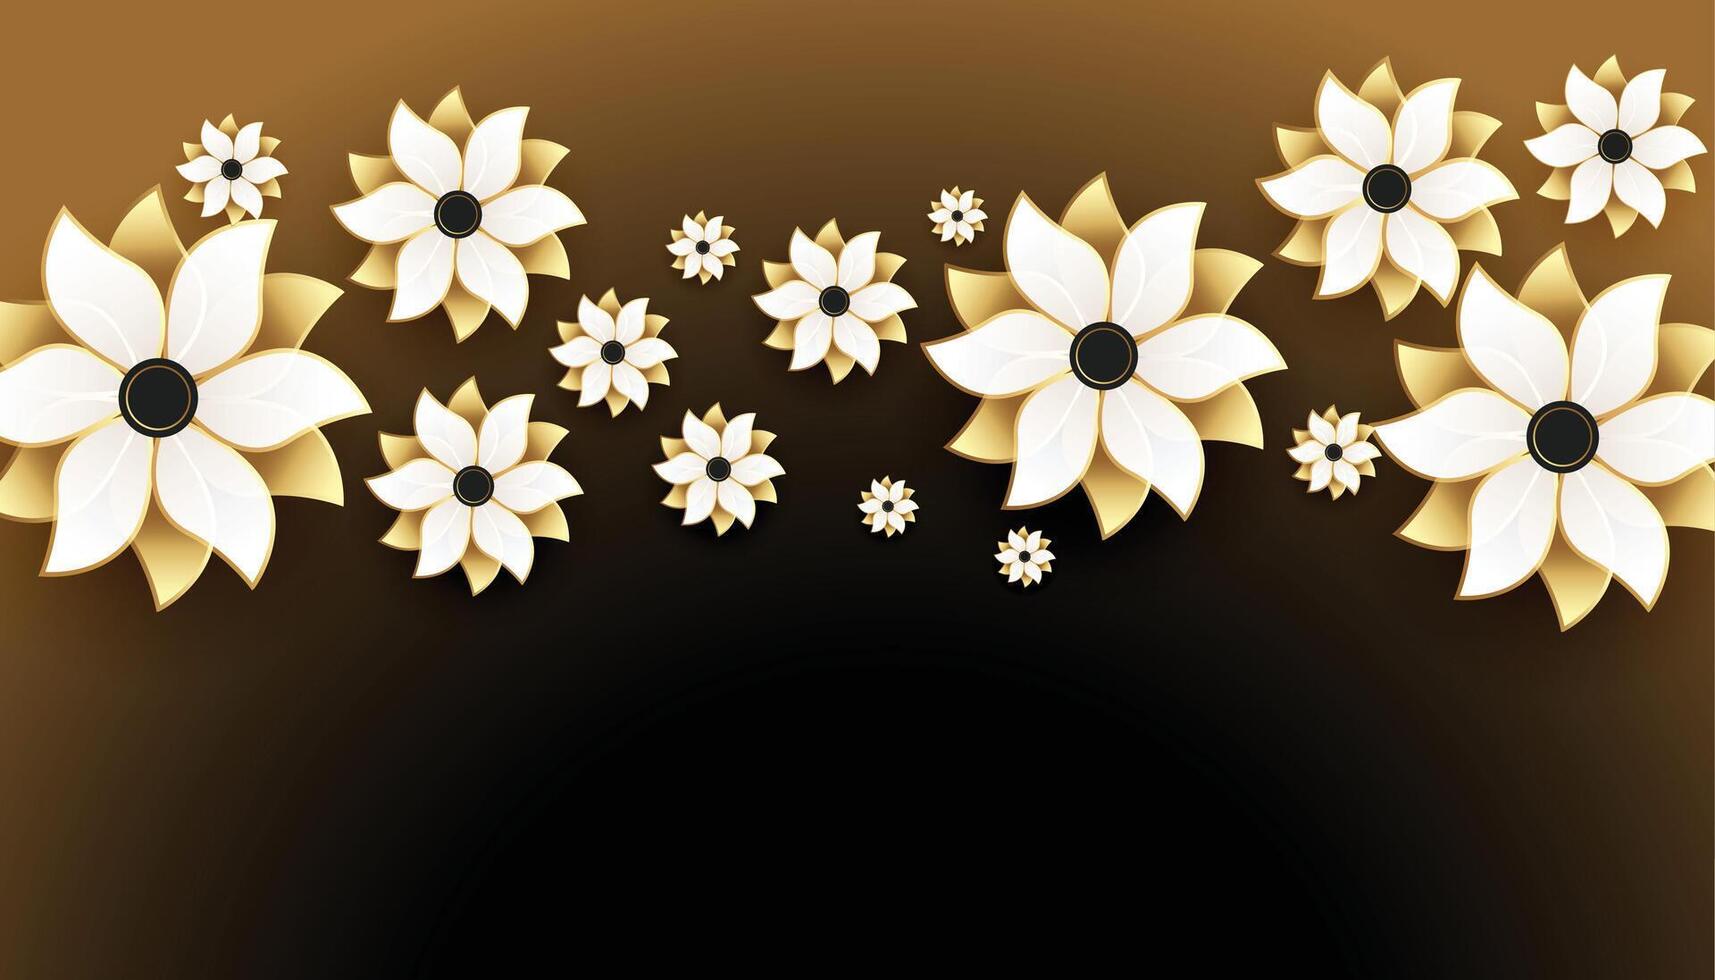 nice 3d golden flowers on black background vector